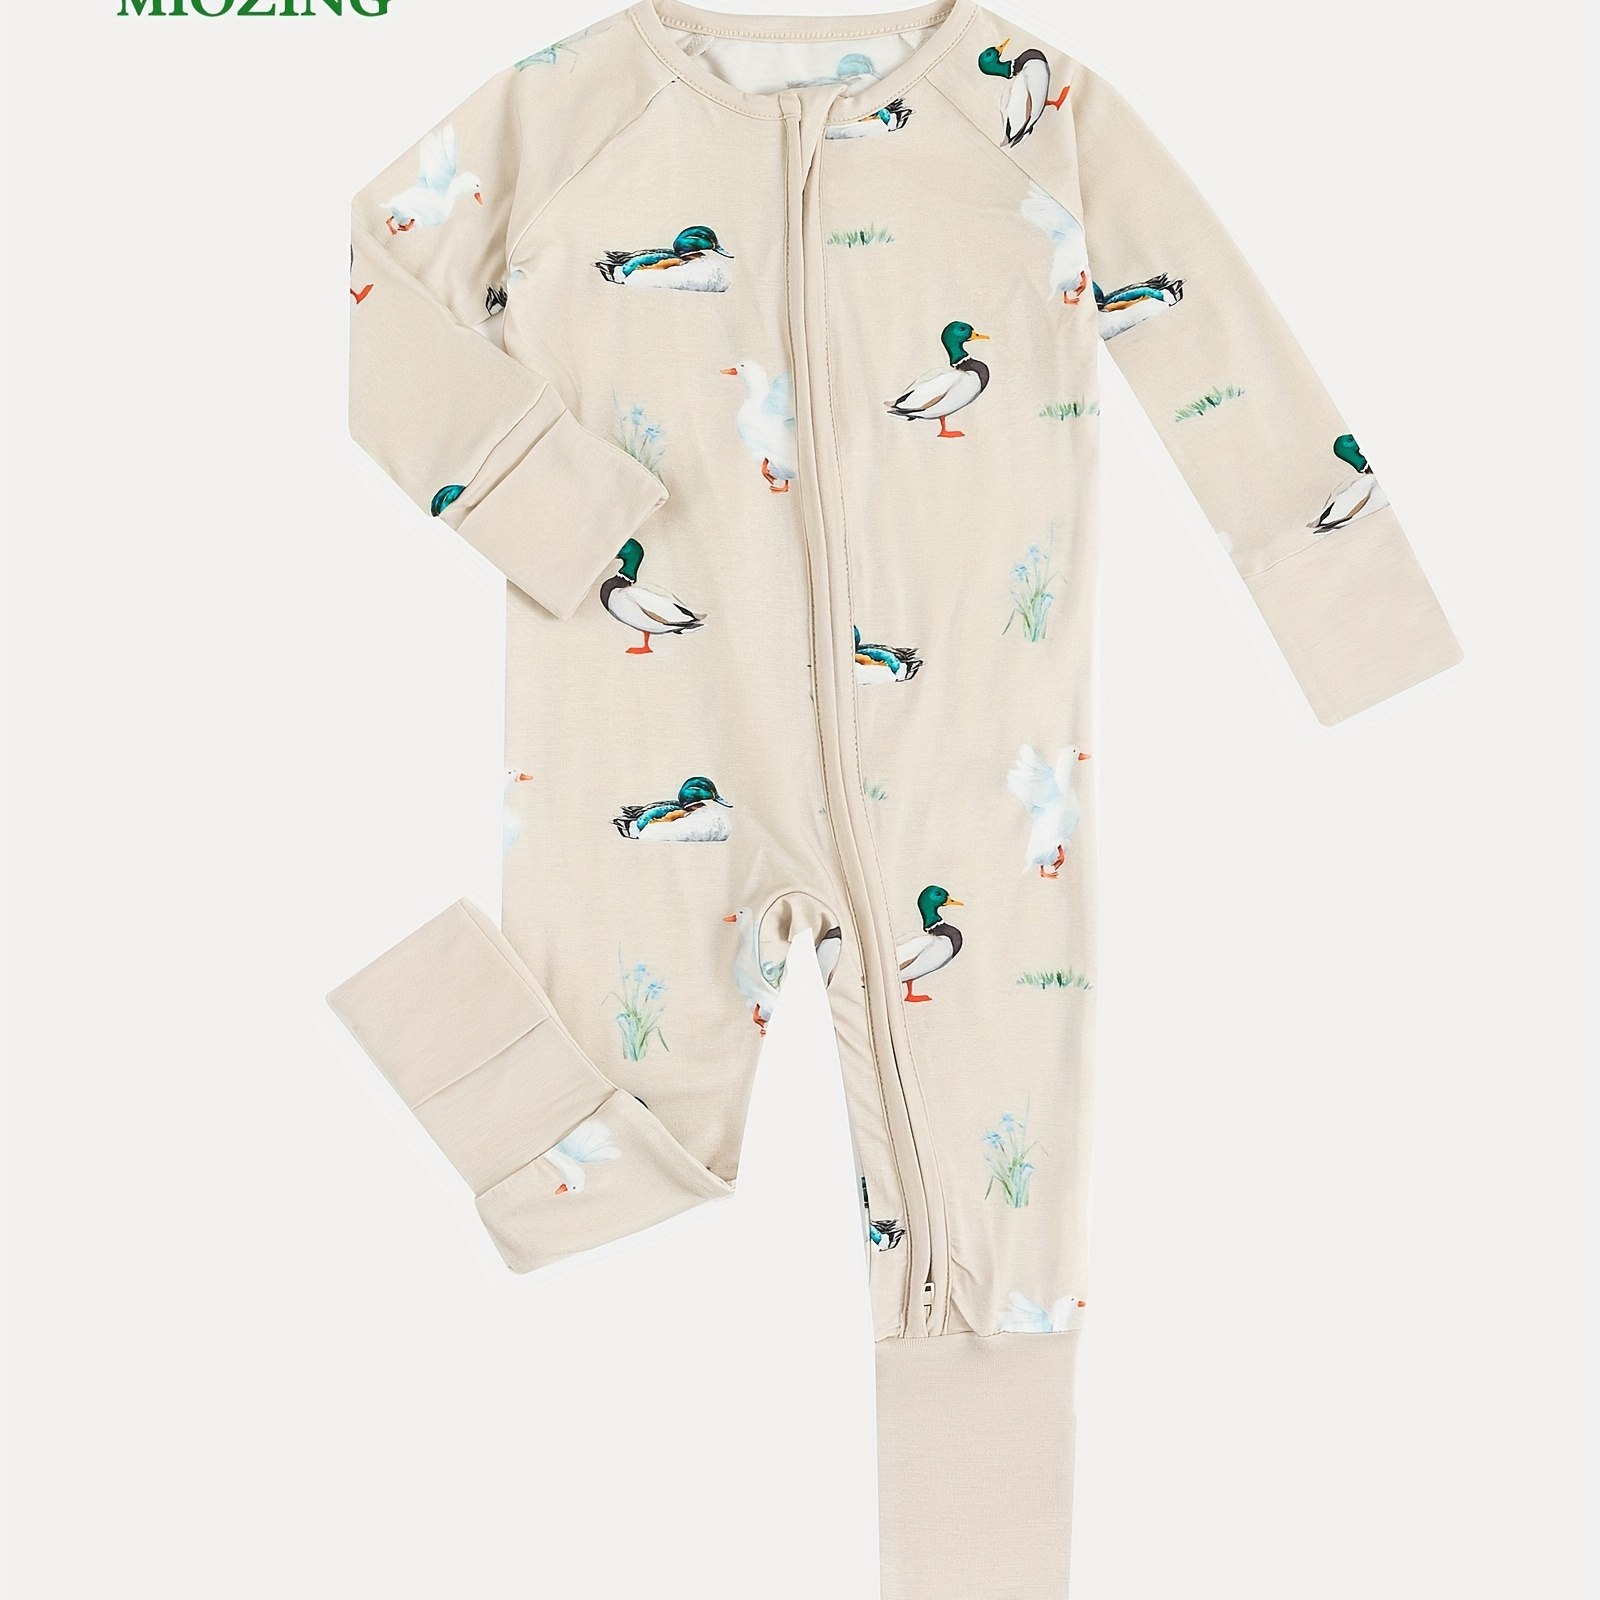 

Miozing Bamboo Fiber Bodysuit For Infants, Duck Goose Pattern Long Sleeve Onesie, Baby Girl's Clothing